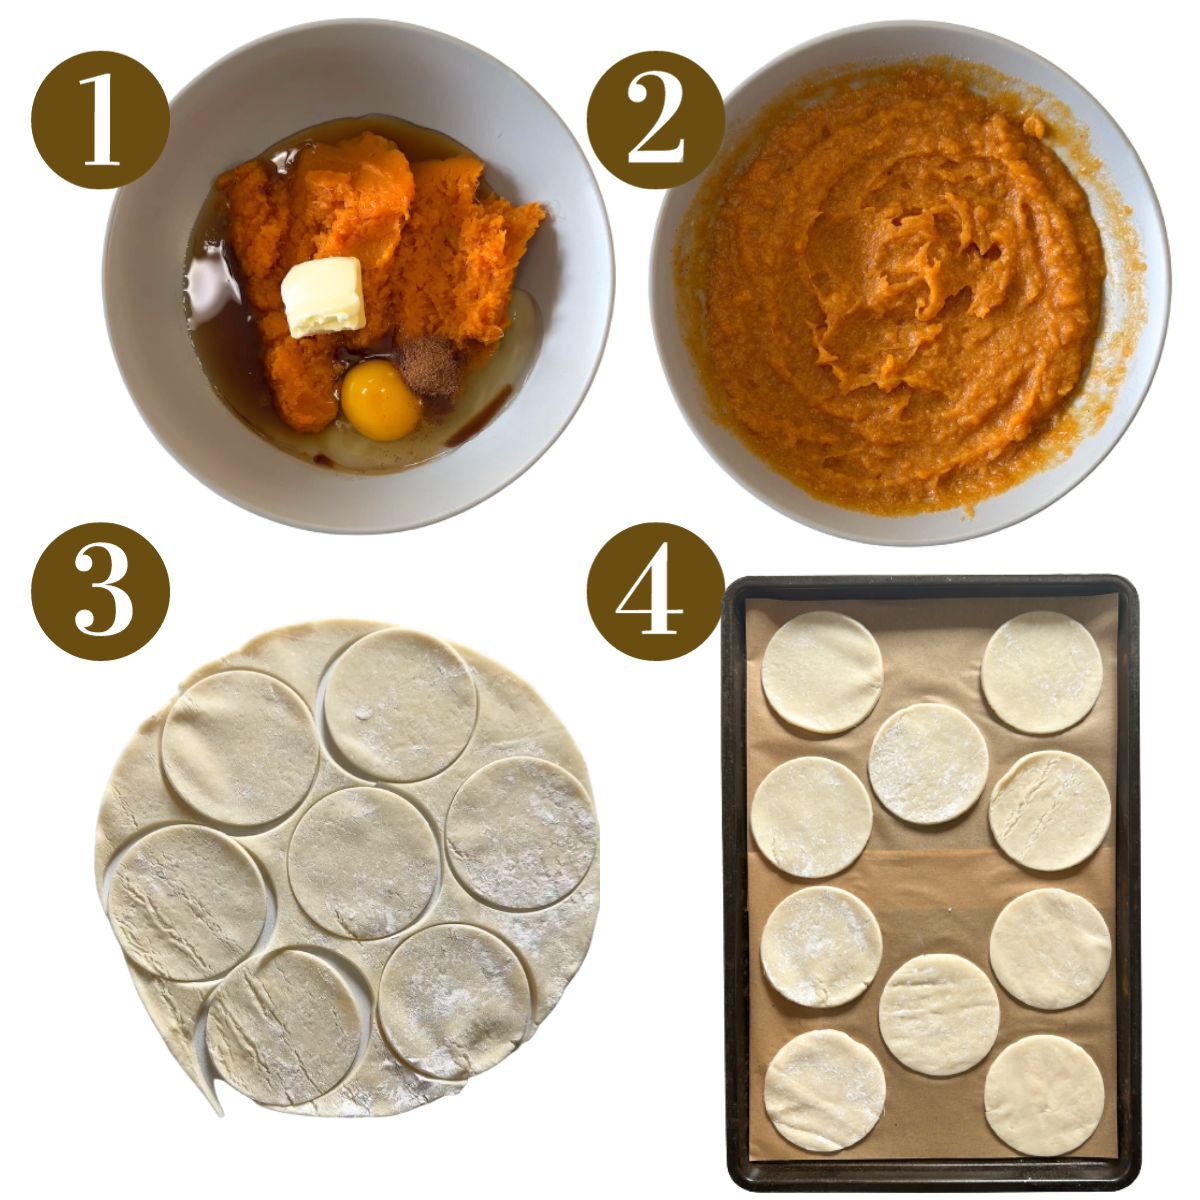 Steps to make sweet potato hand pies.